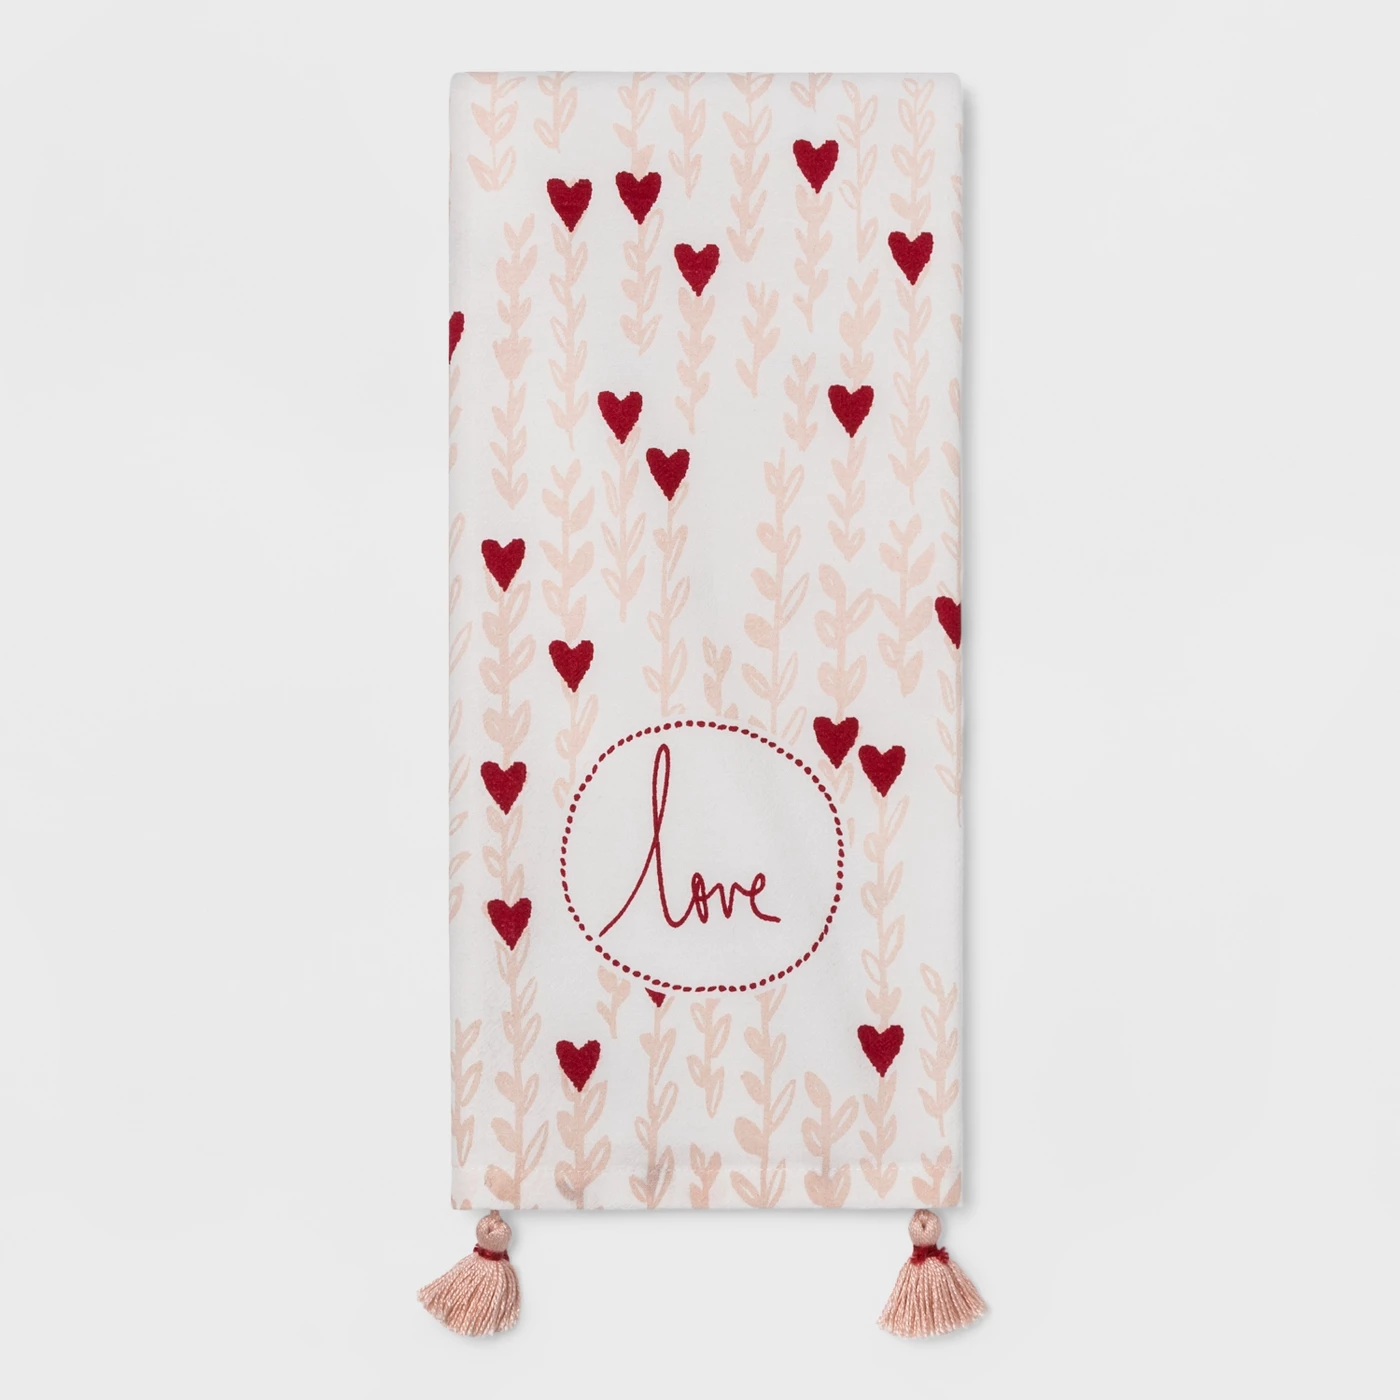 'Love' With Tassels Kitchen Towel Cream/Pink - Opalhouseâ¢ - image 1 of 1